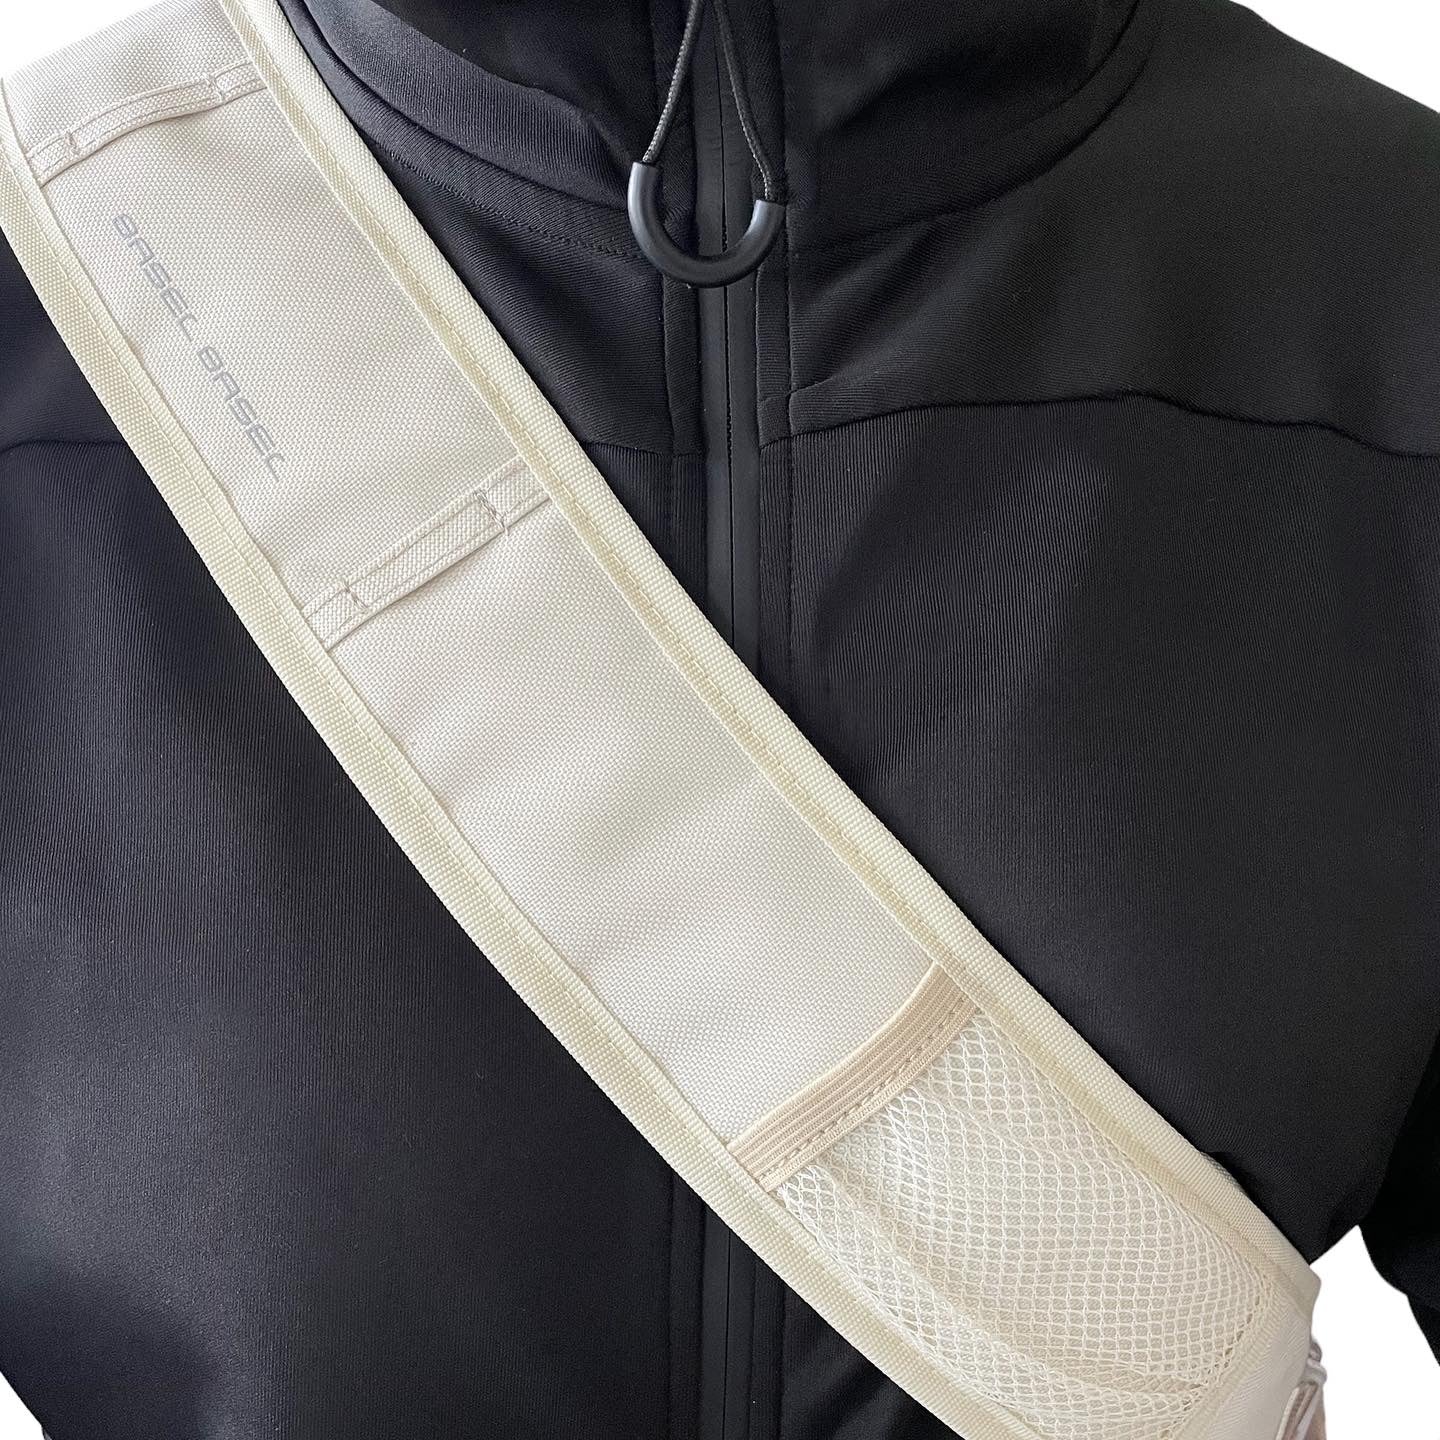 baselbasel all new waterproof 25L sling backpack